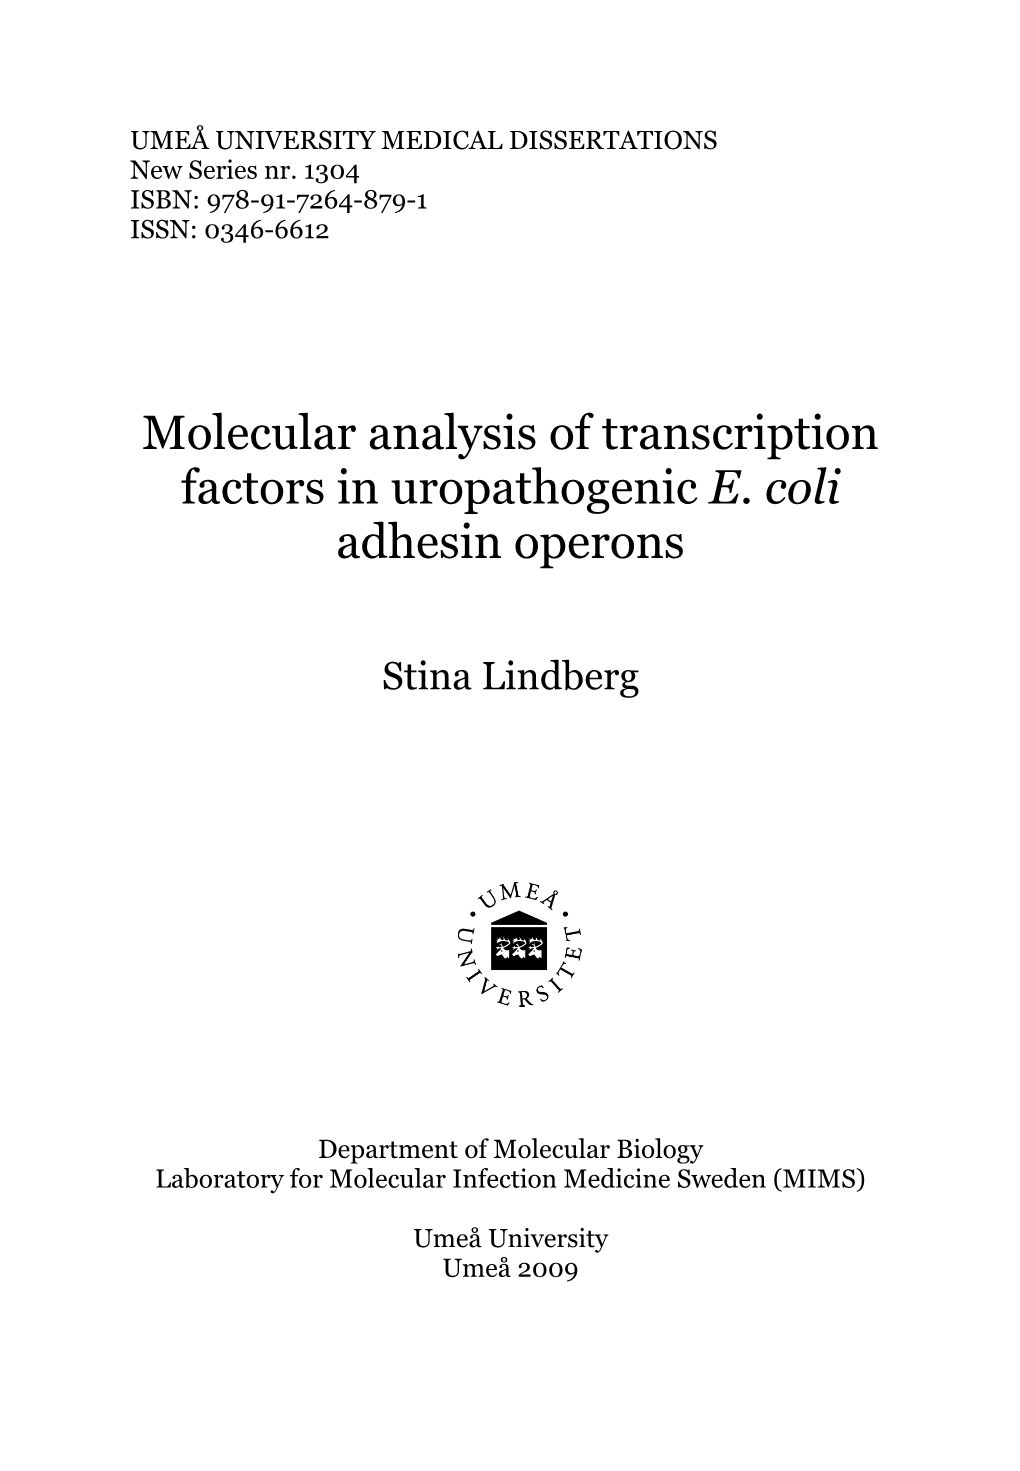 Molecular Analysis of Transcription Factors in Uropathogenic E. Coli Adhesin Operons